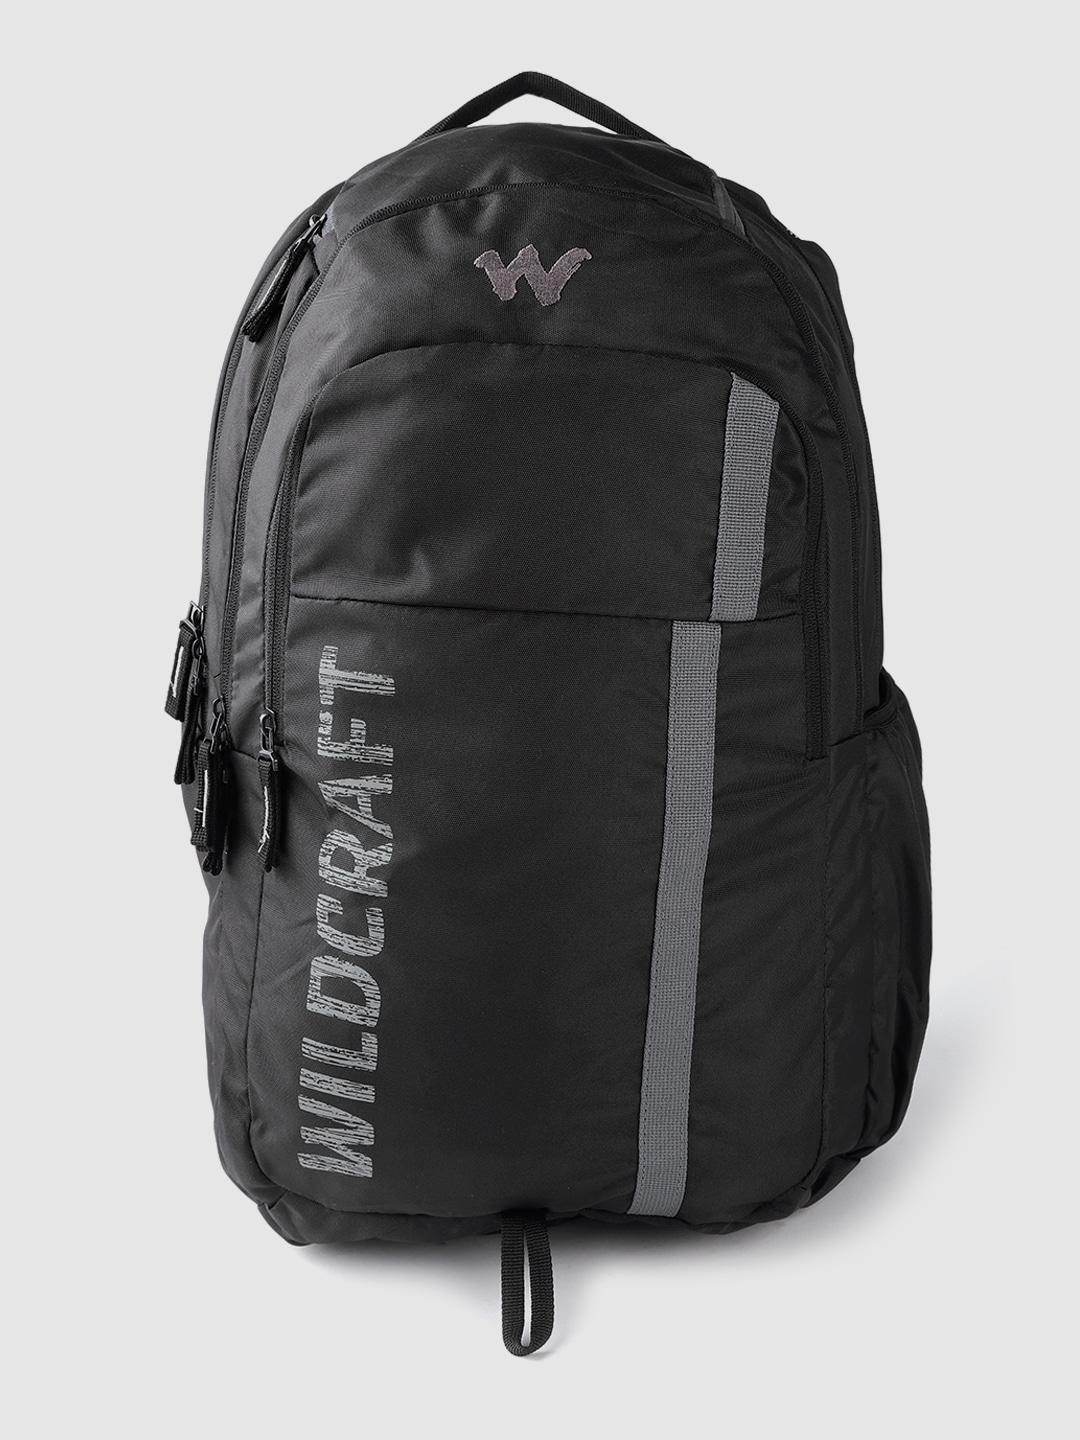 wildcraft-unisex-lunar-backpack